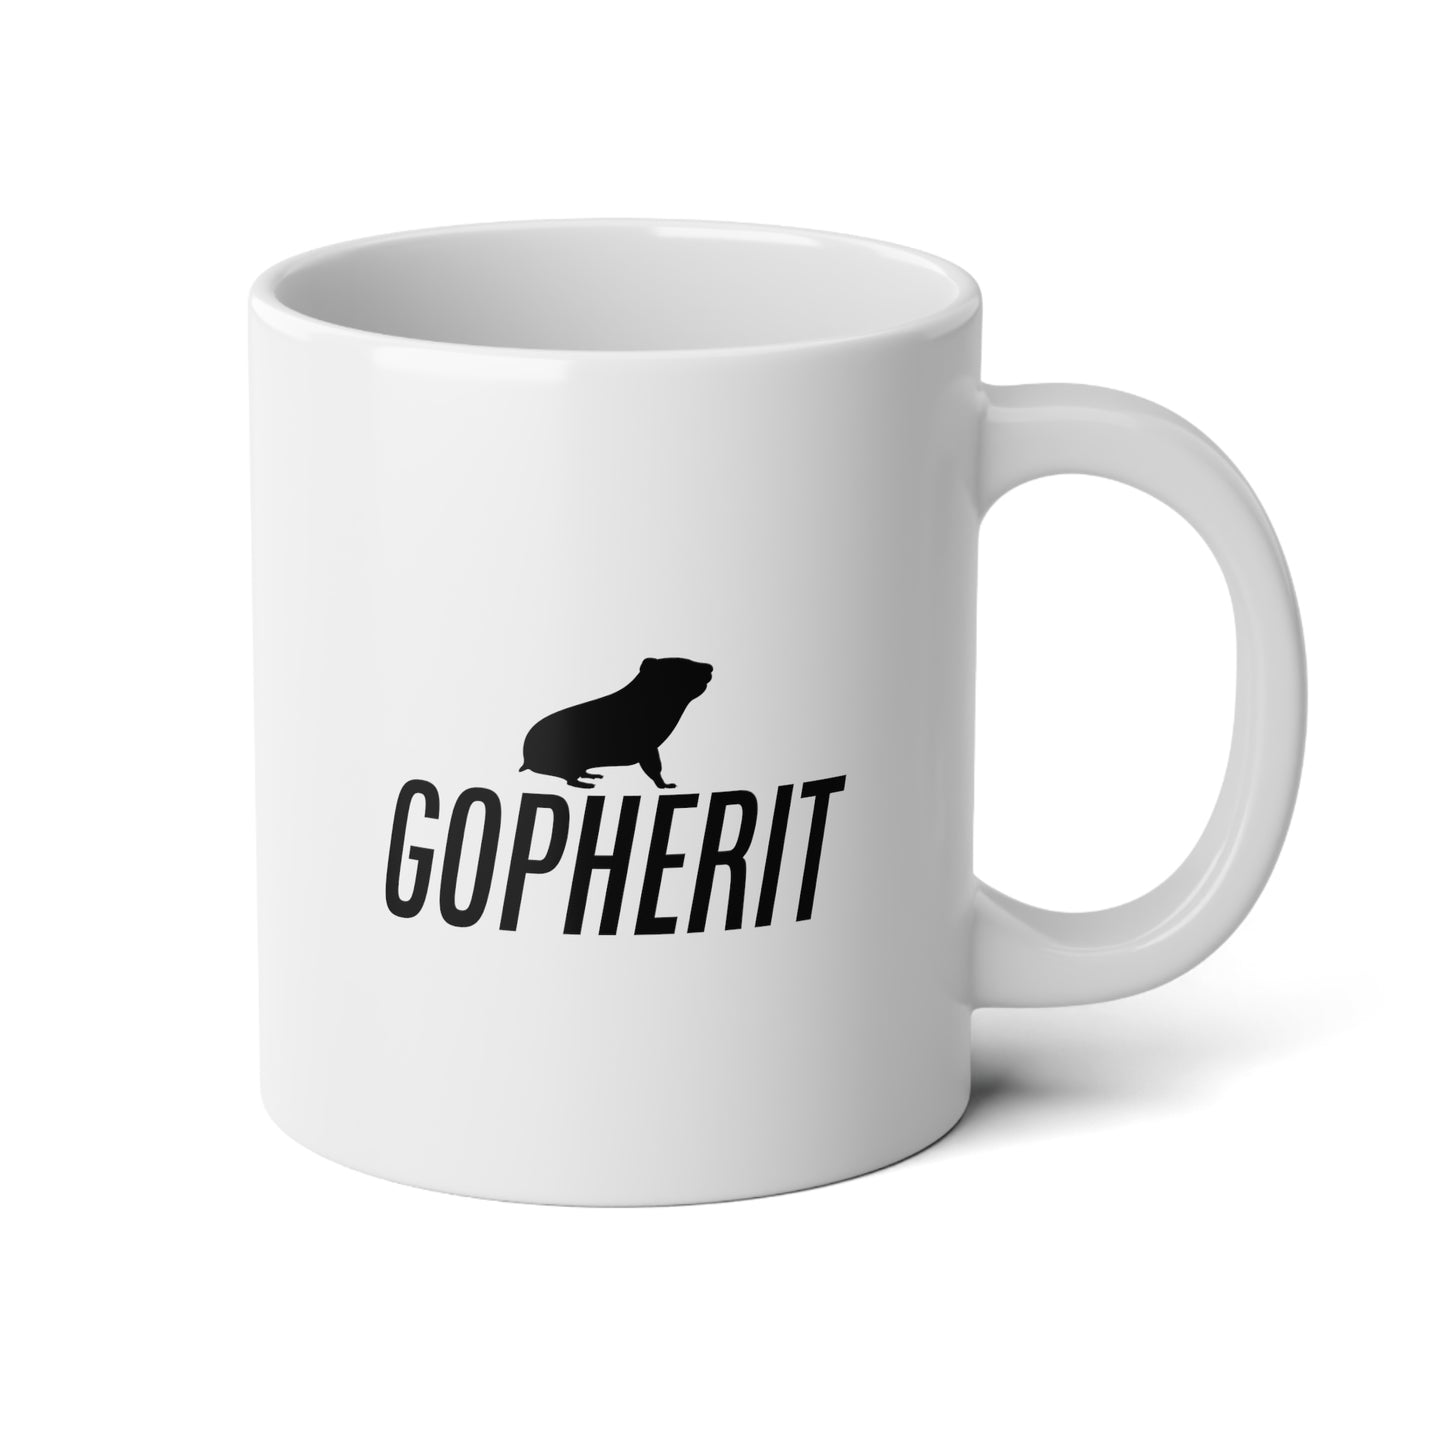 Gopherit - Coffee Mug